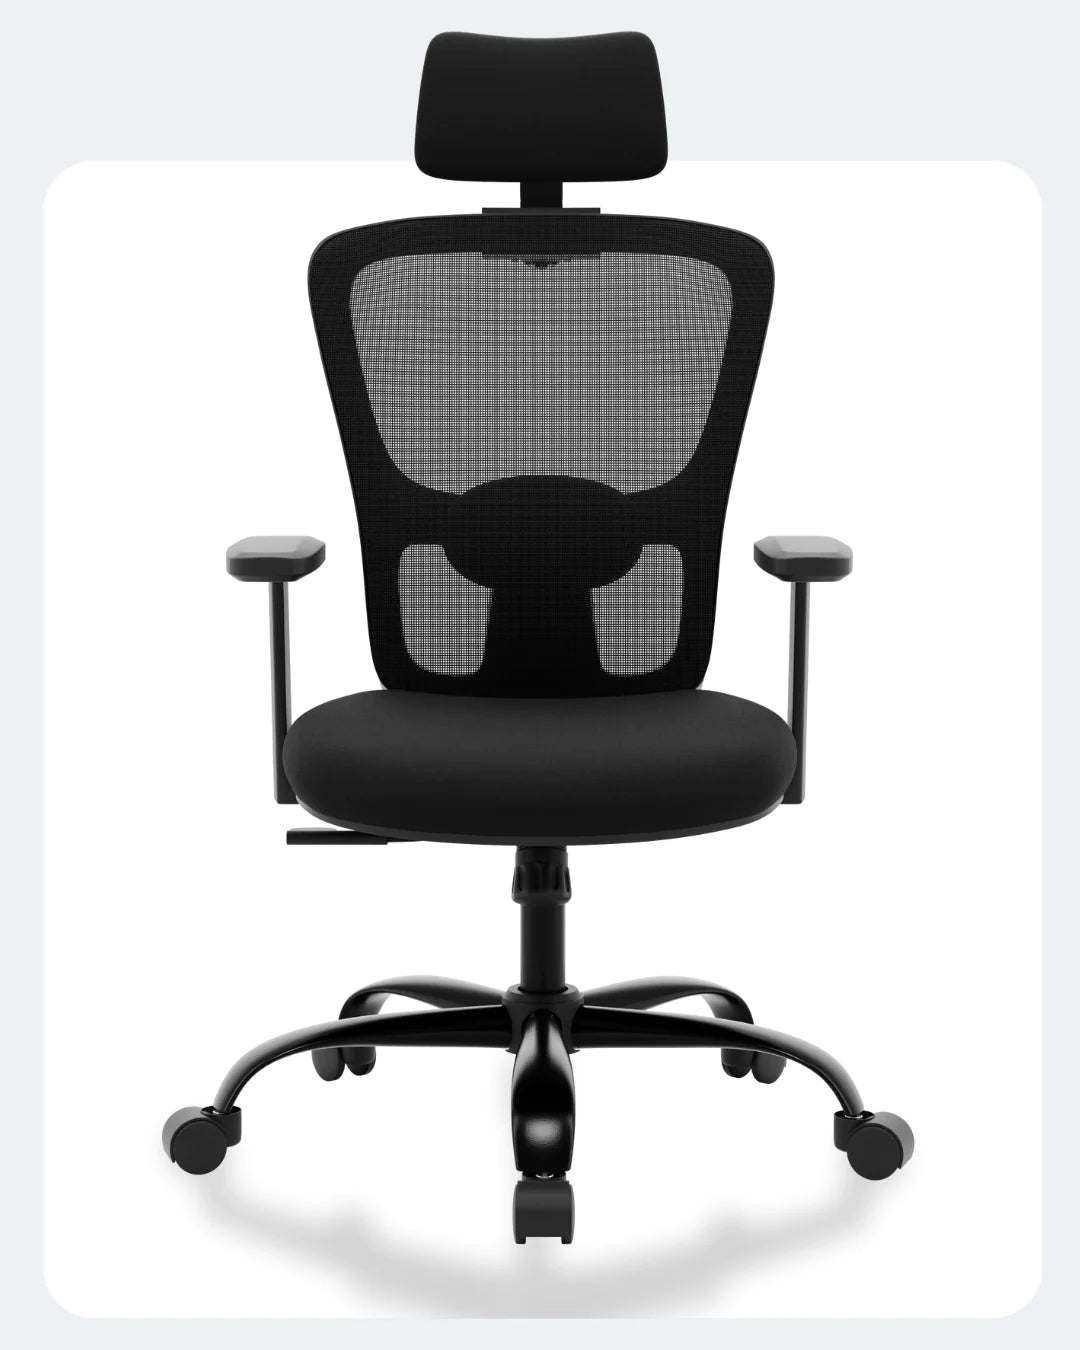 Buy Jupiter Echo High Back Mesh Office Chair Online